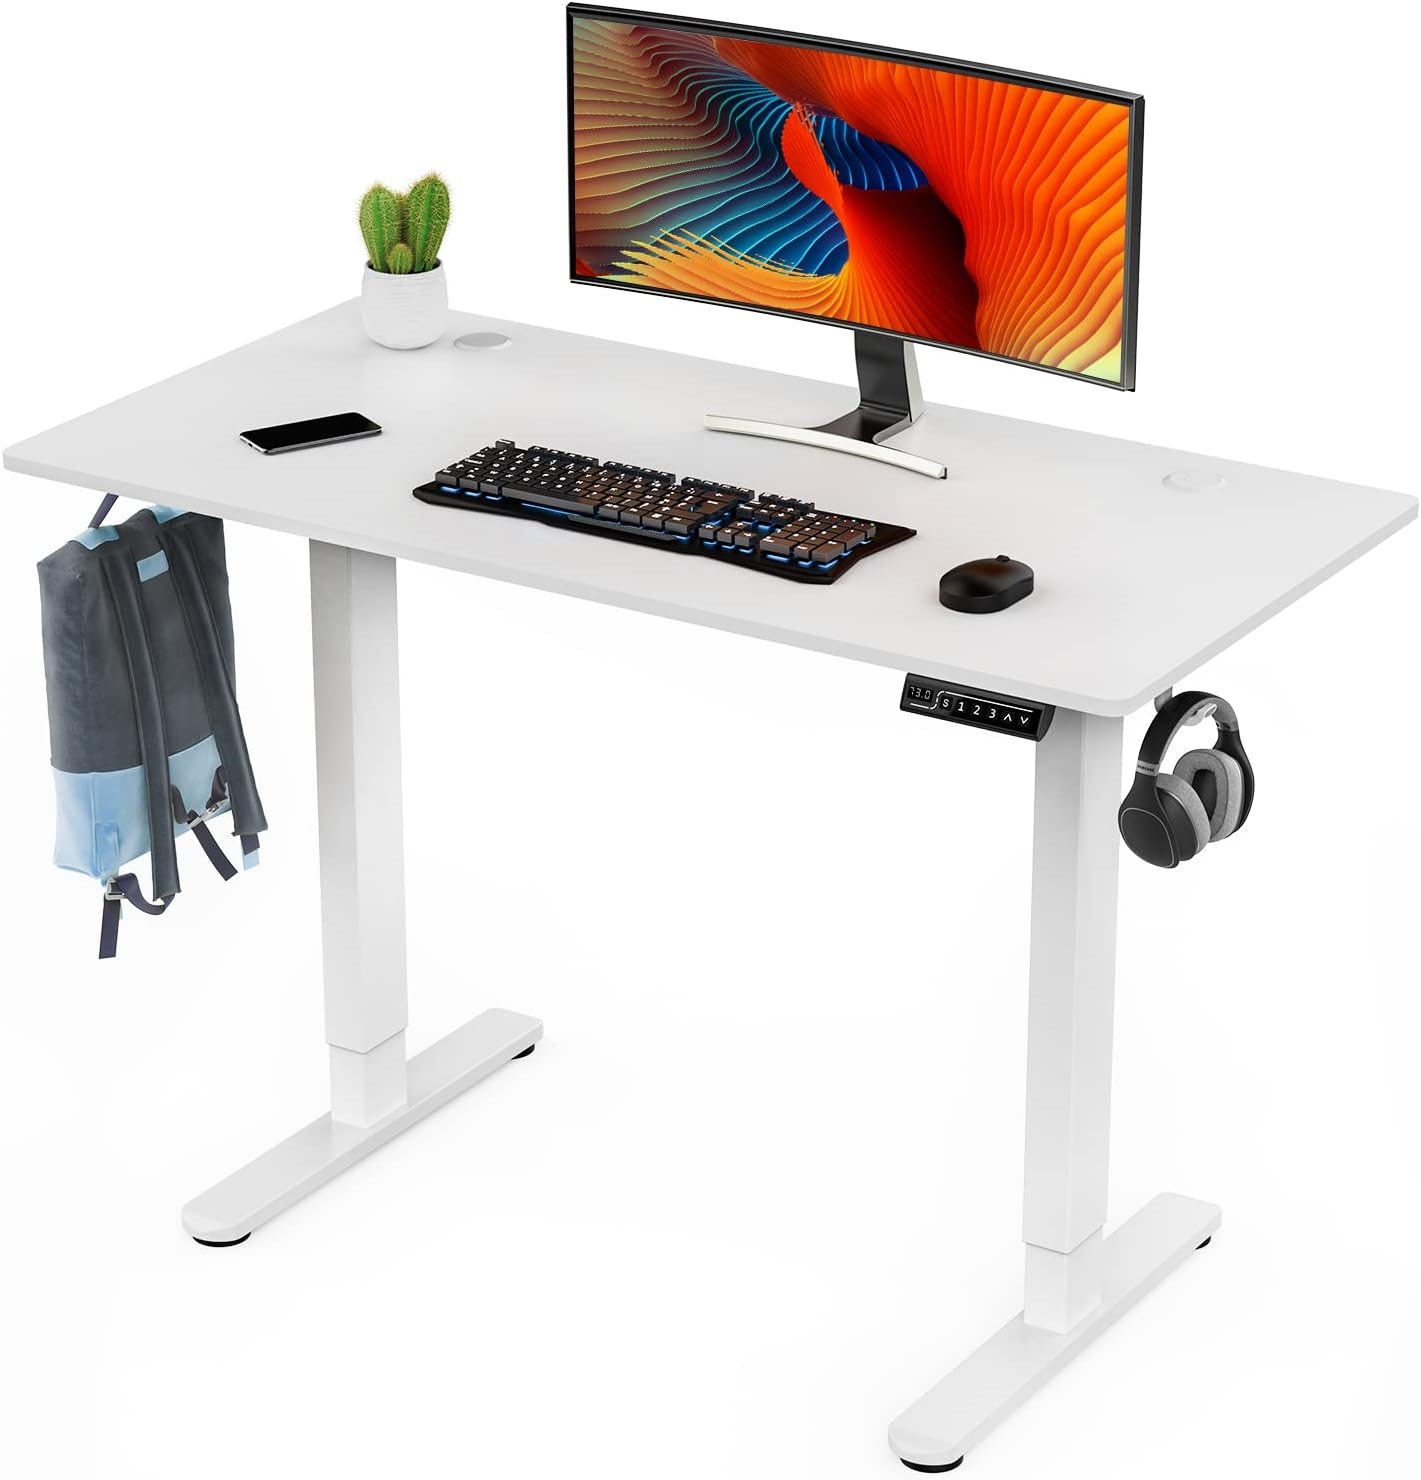 Sweetcrispy Electric Standing Desk | DeviceDaily.com